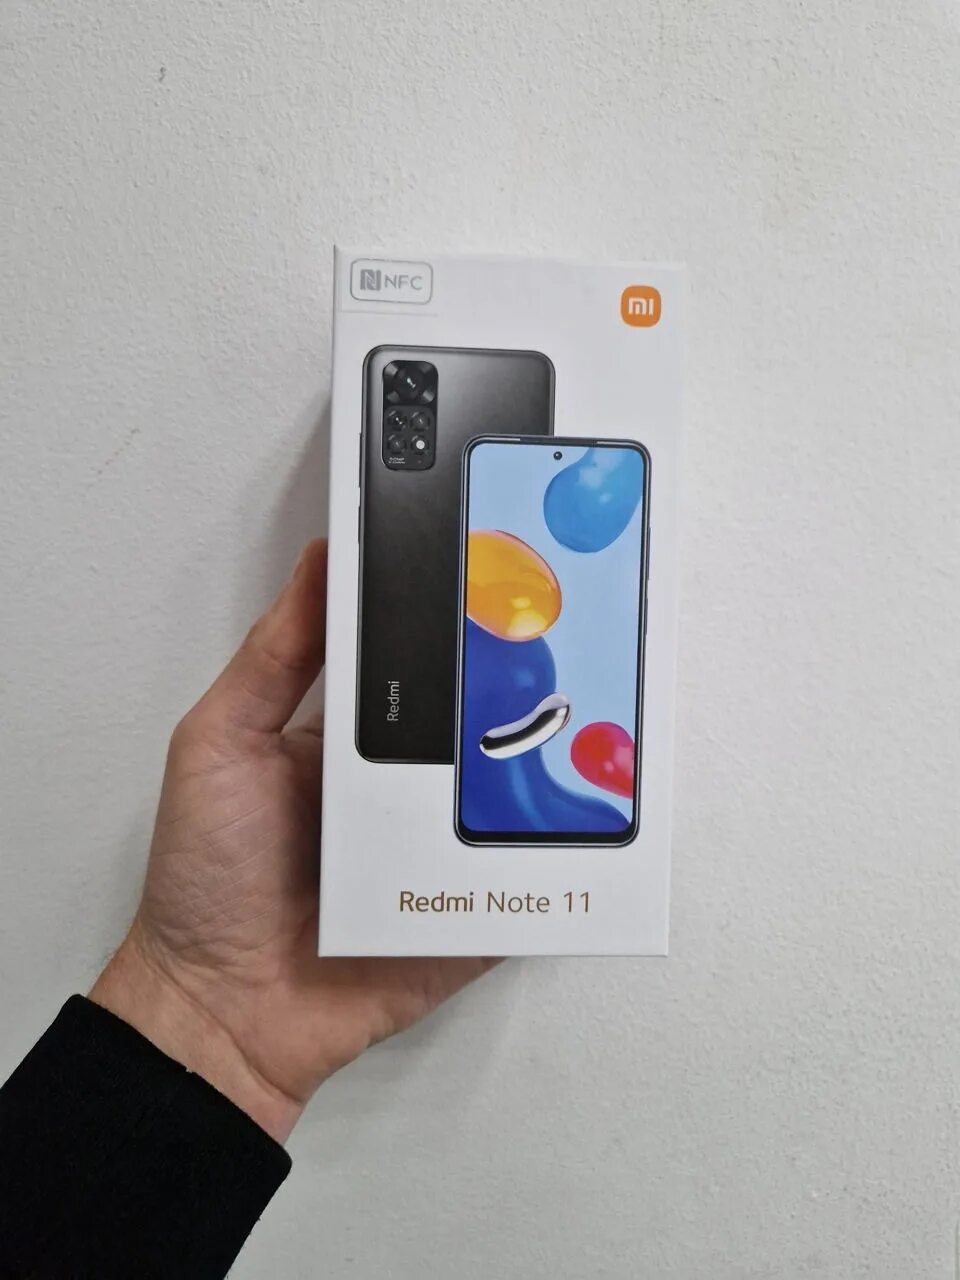 Redmi Note 11. Редми ноут 11 2022. Редми ноте 11 в упаковке. Redmi Note 11 Global. Note 11 global